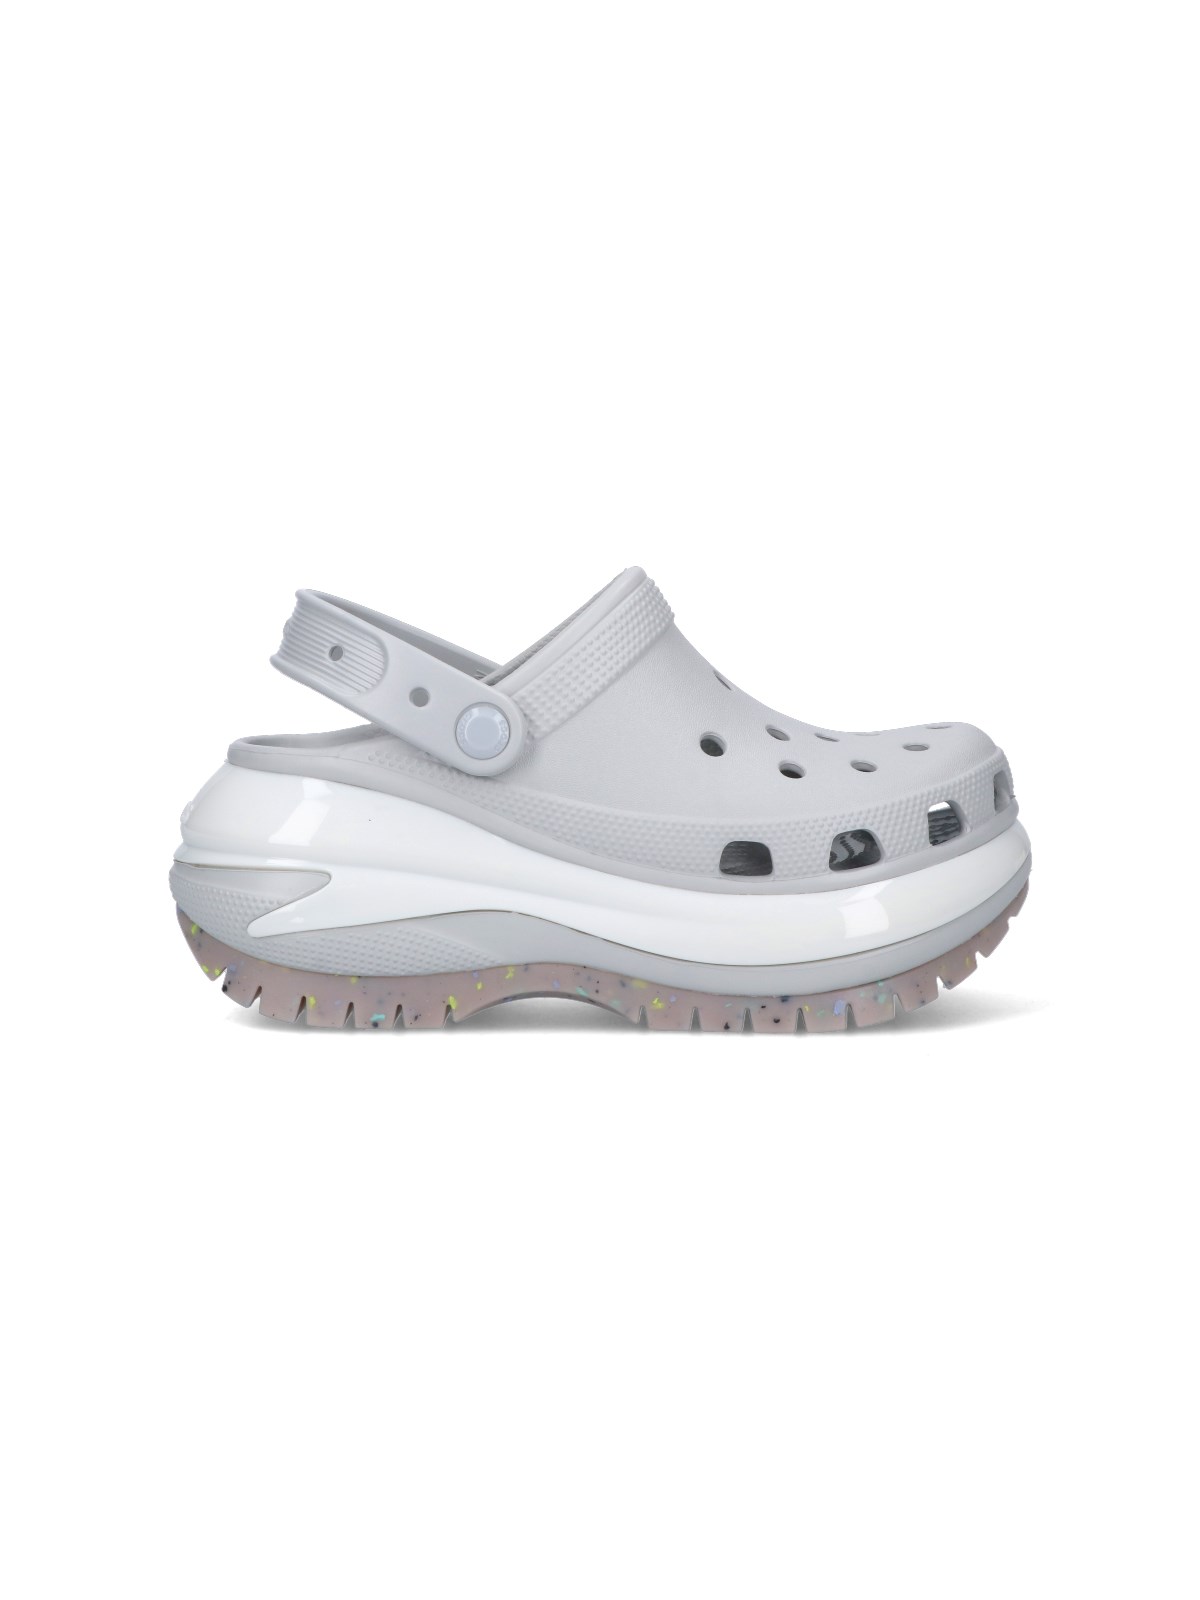 Crocs Flat Shoes In Gray